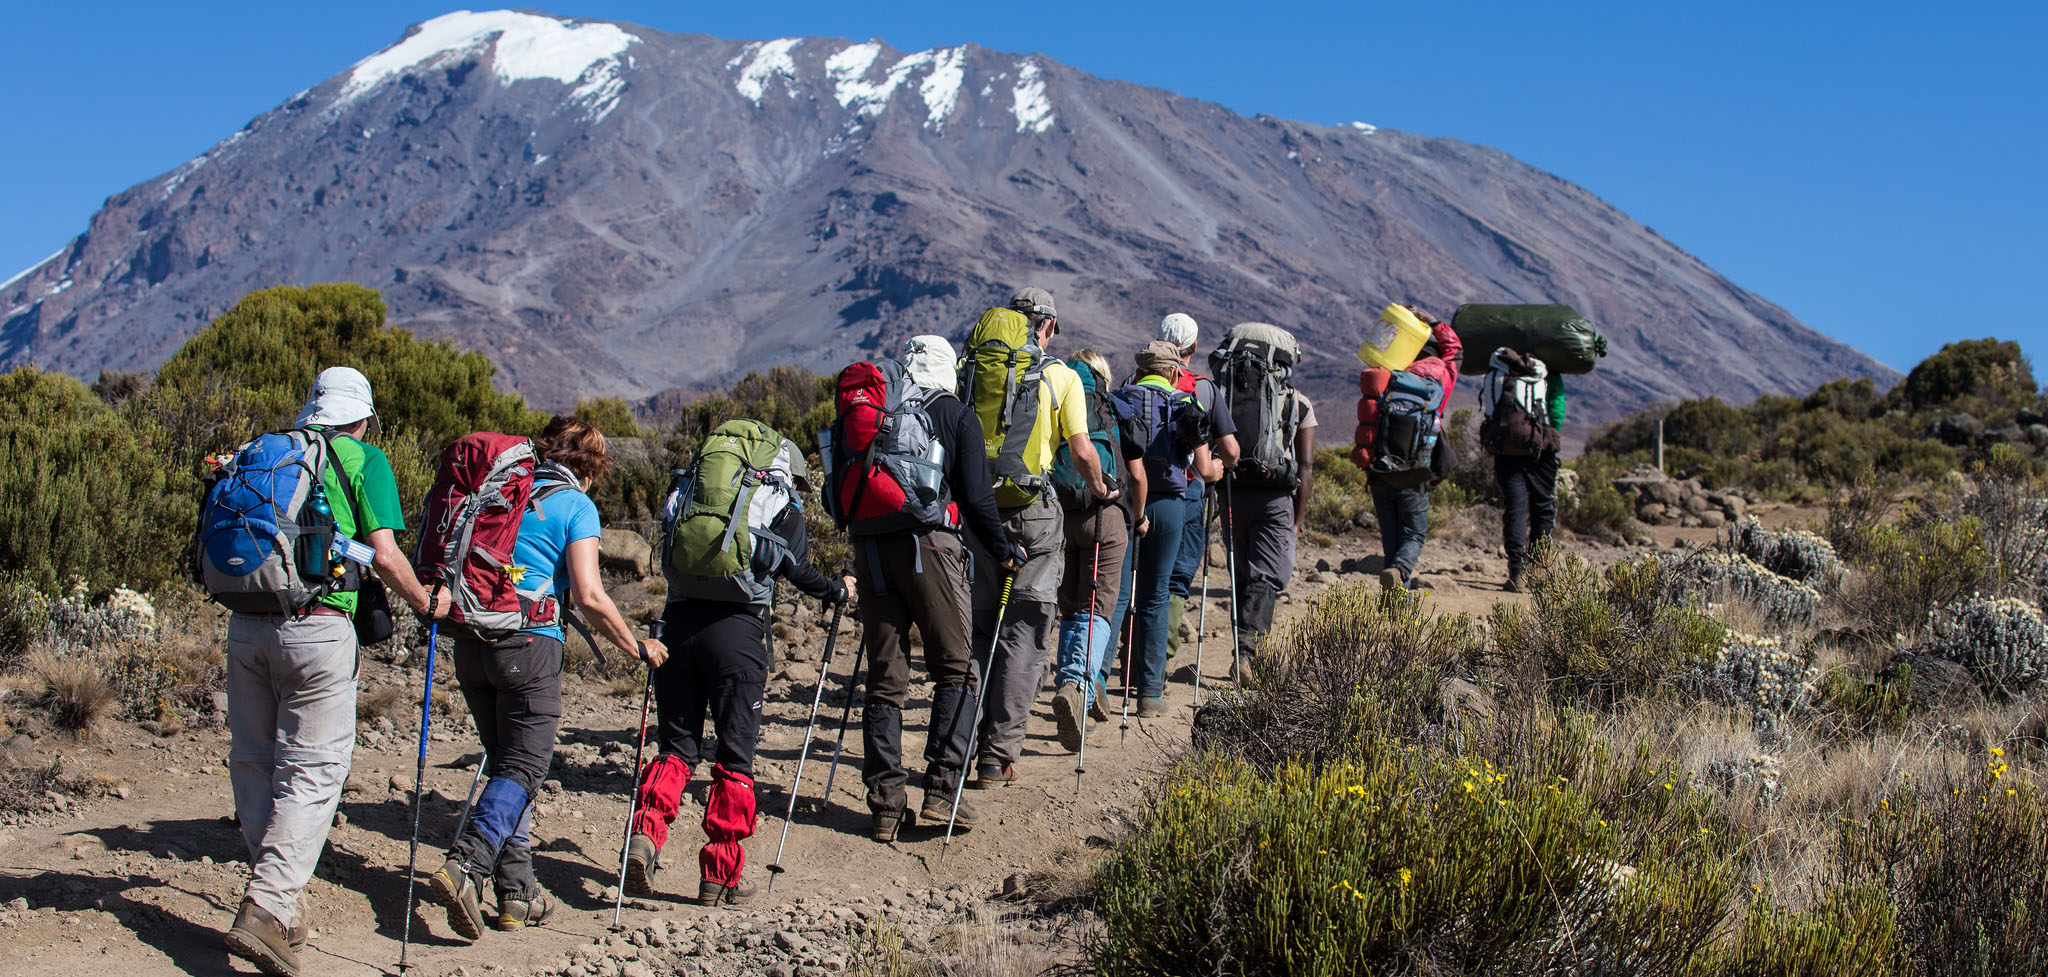 The allure of Mount Kilimanjaro